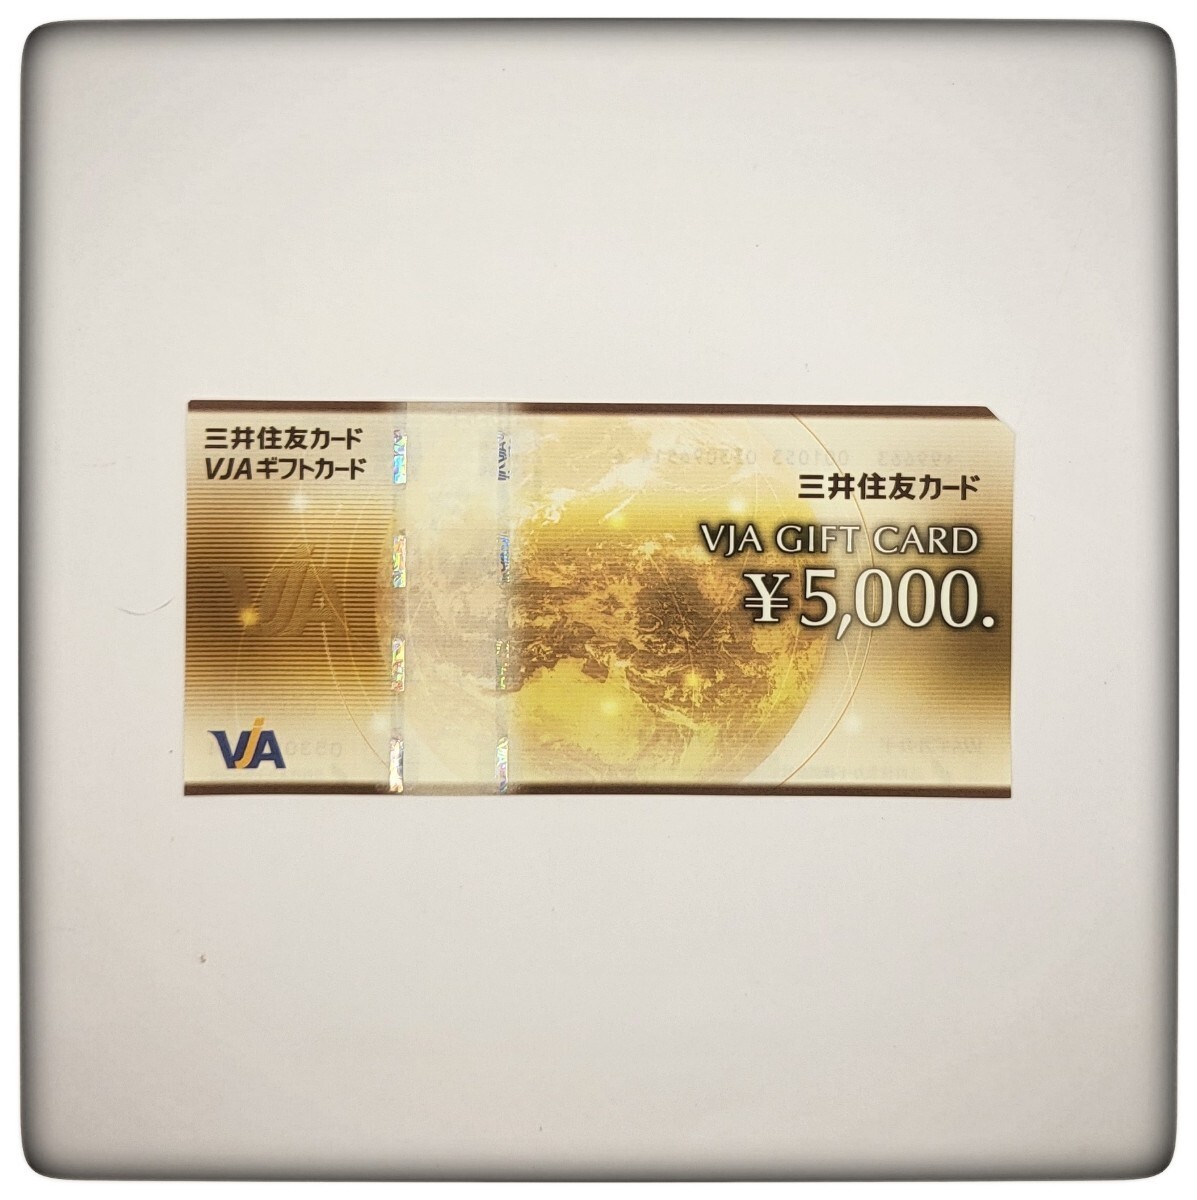 VJA GIFT CARD Mitsui Sumitomo карта 5000 иен минут новый товар не использовался 